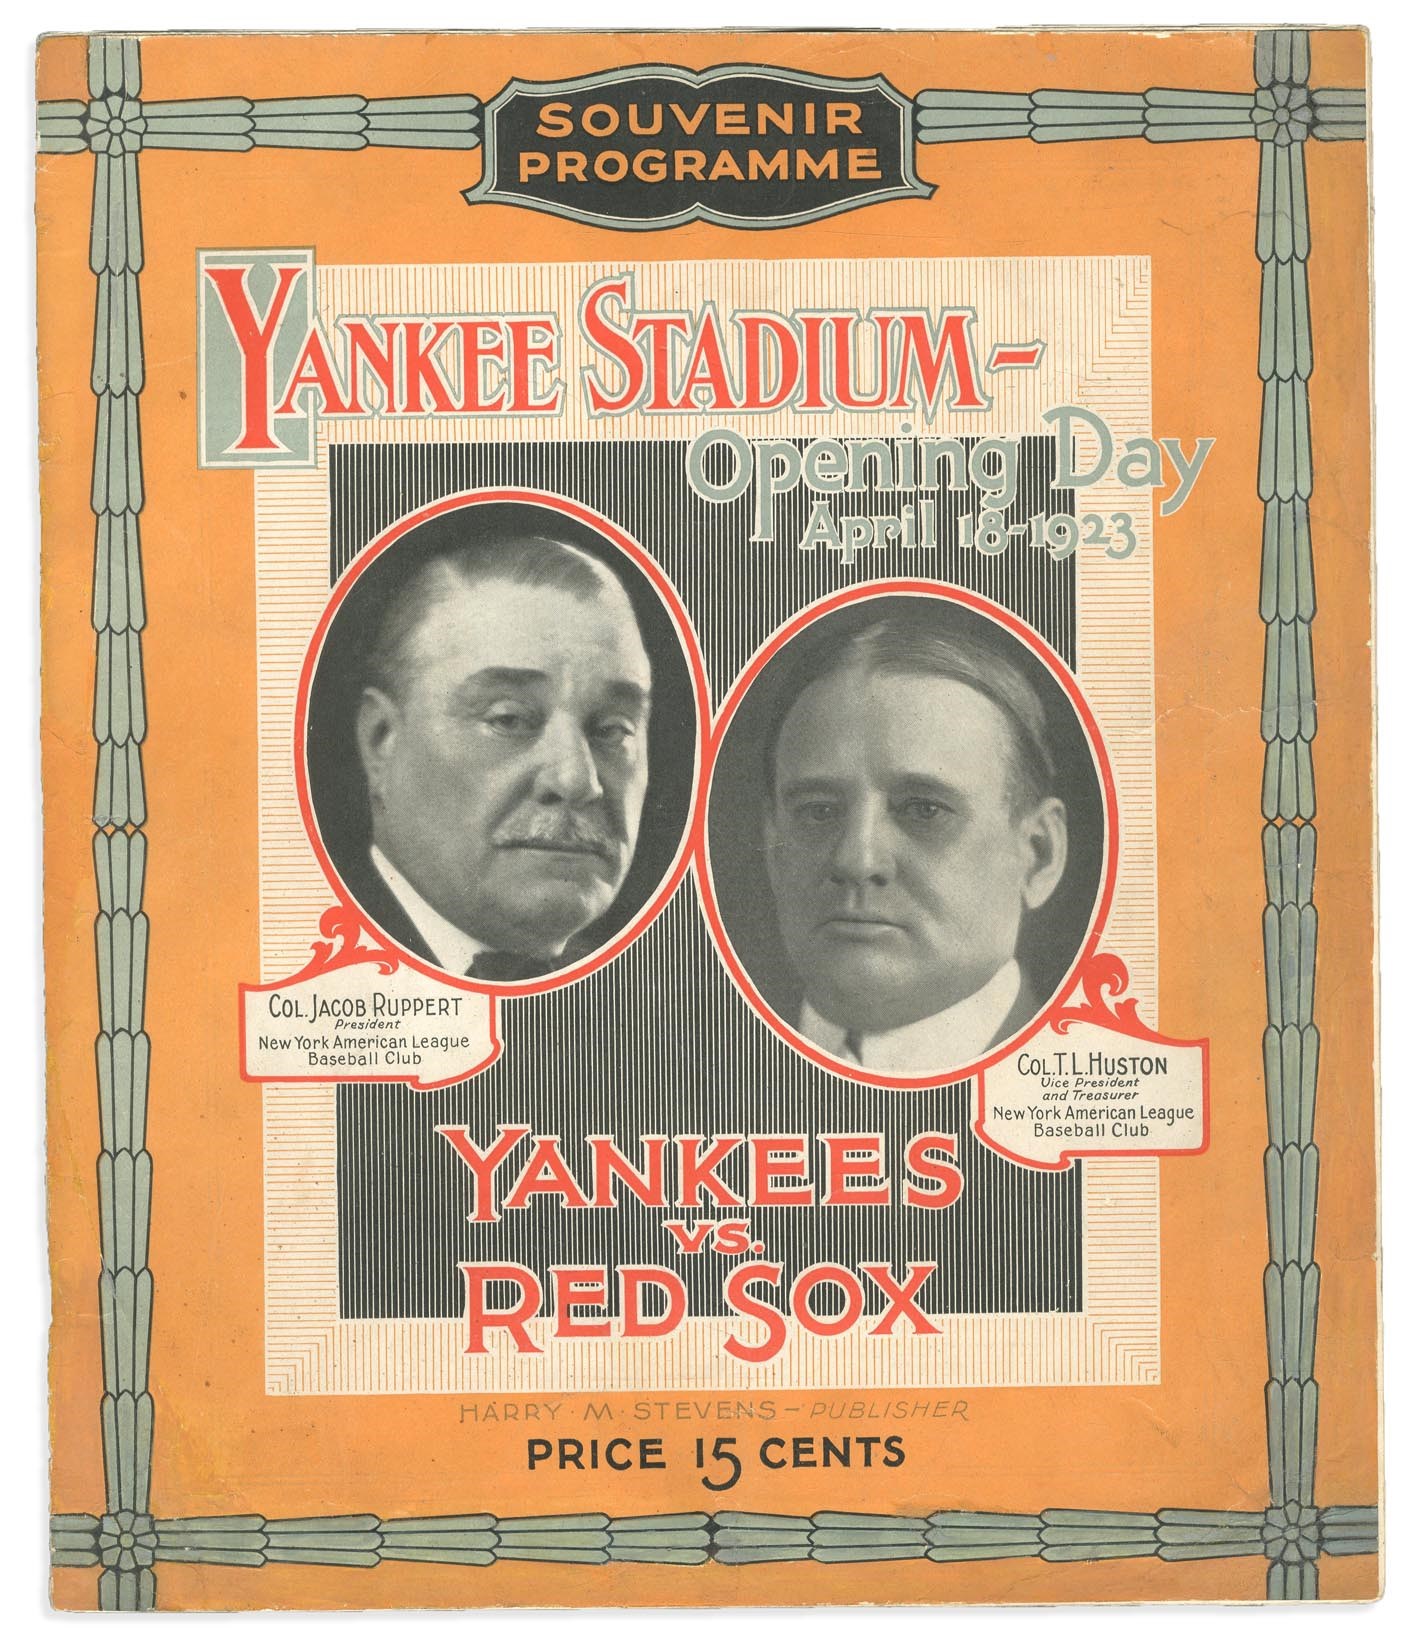 NY Yankees, Giants & Mets - 1923 Opening Day at Yankee Stadium Program